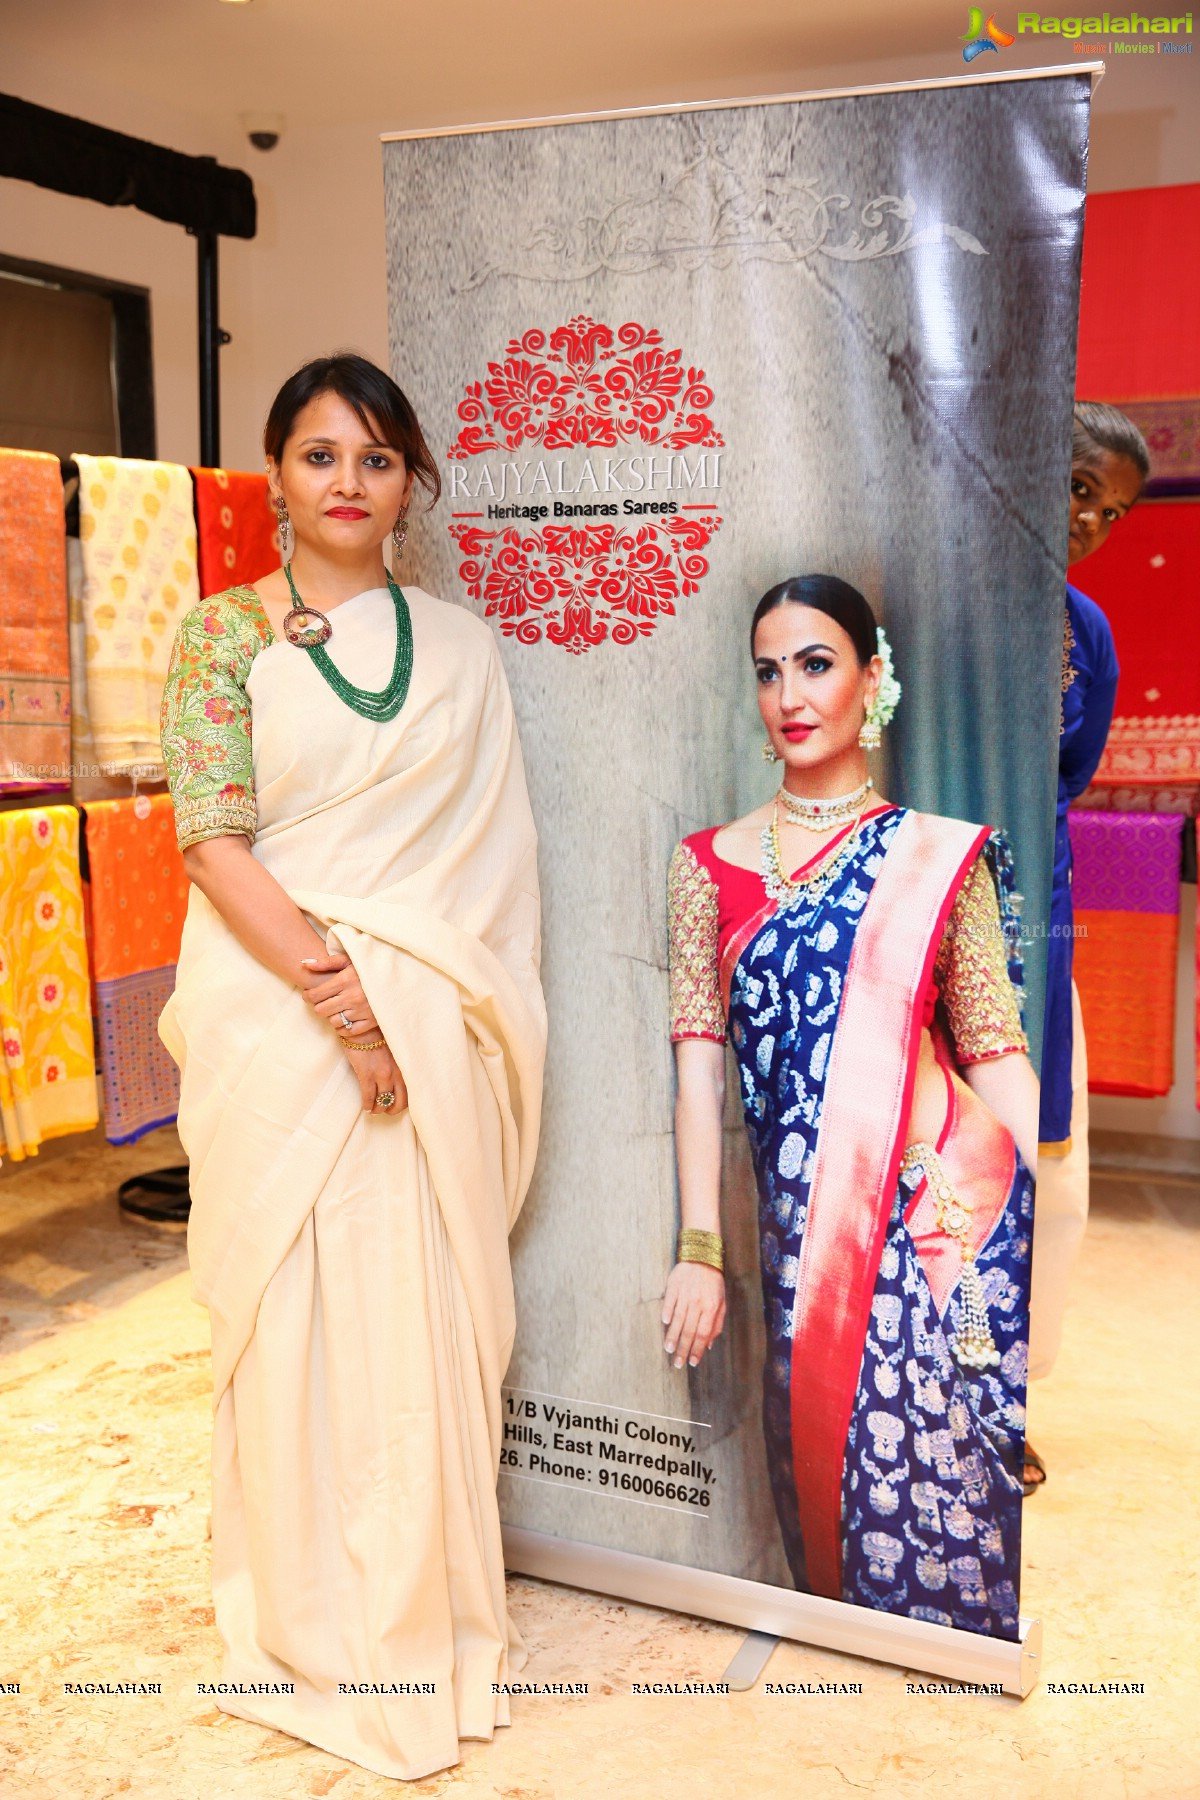 Grand Launch of Tales of Banaras - An Exhibition of Classic Banaras Sarees by Designer Rajyalakshmi Gubba